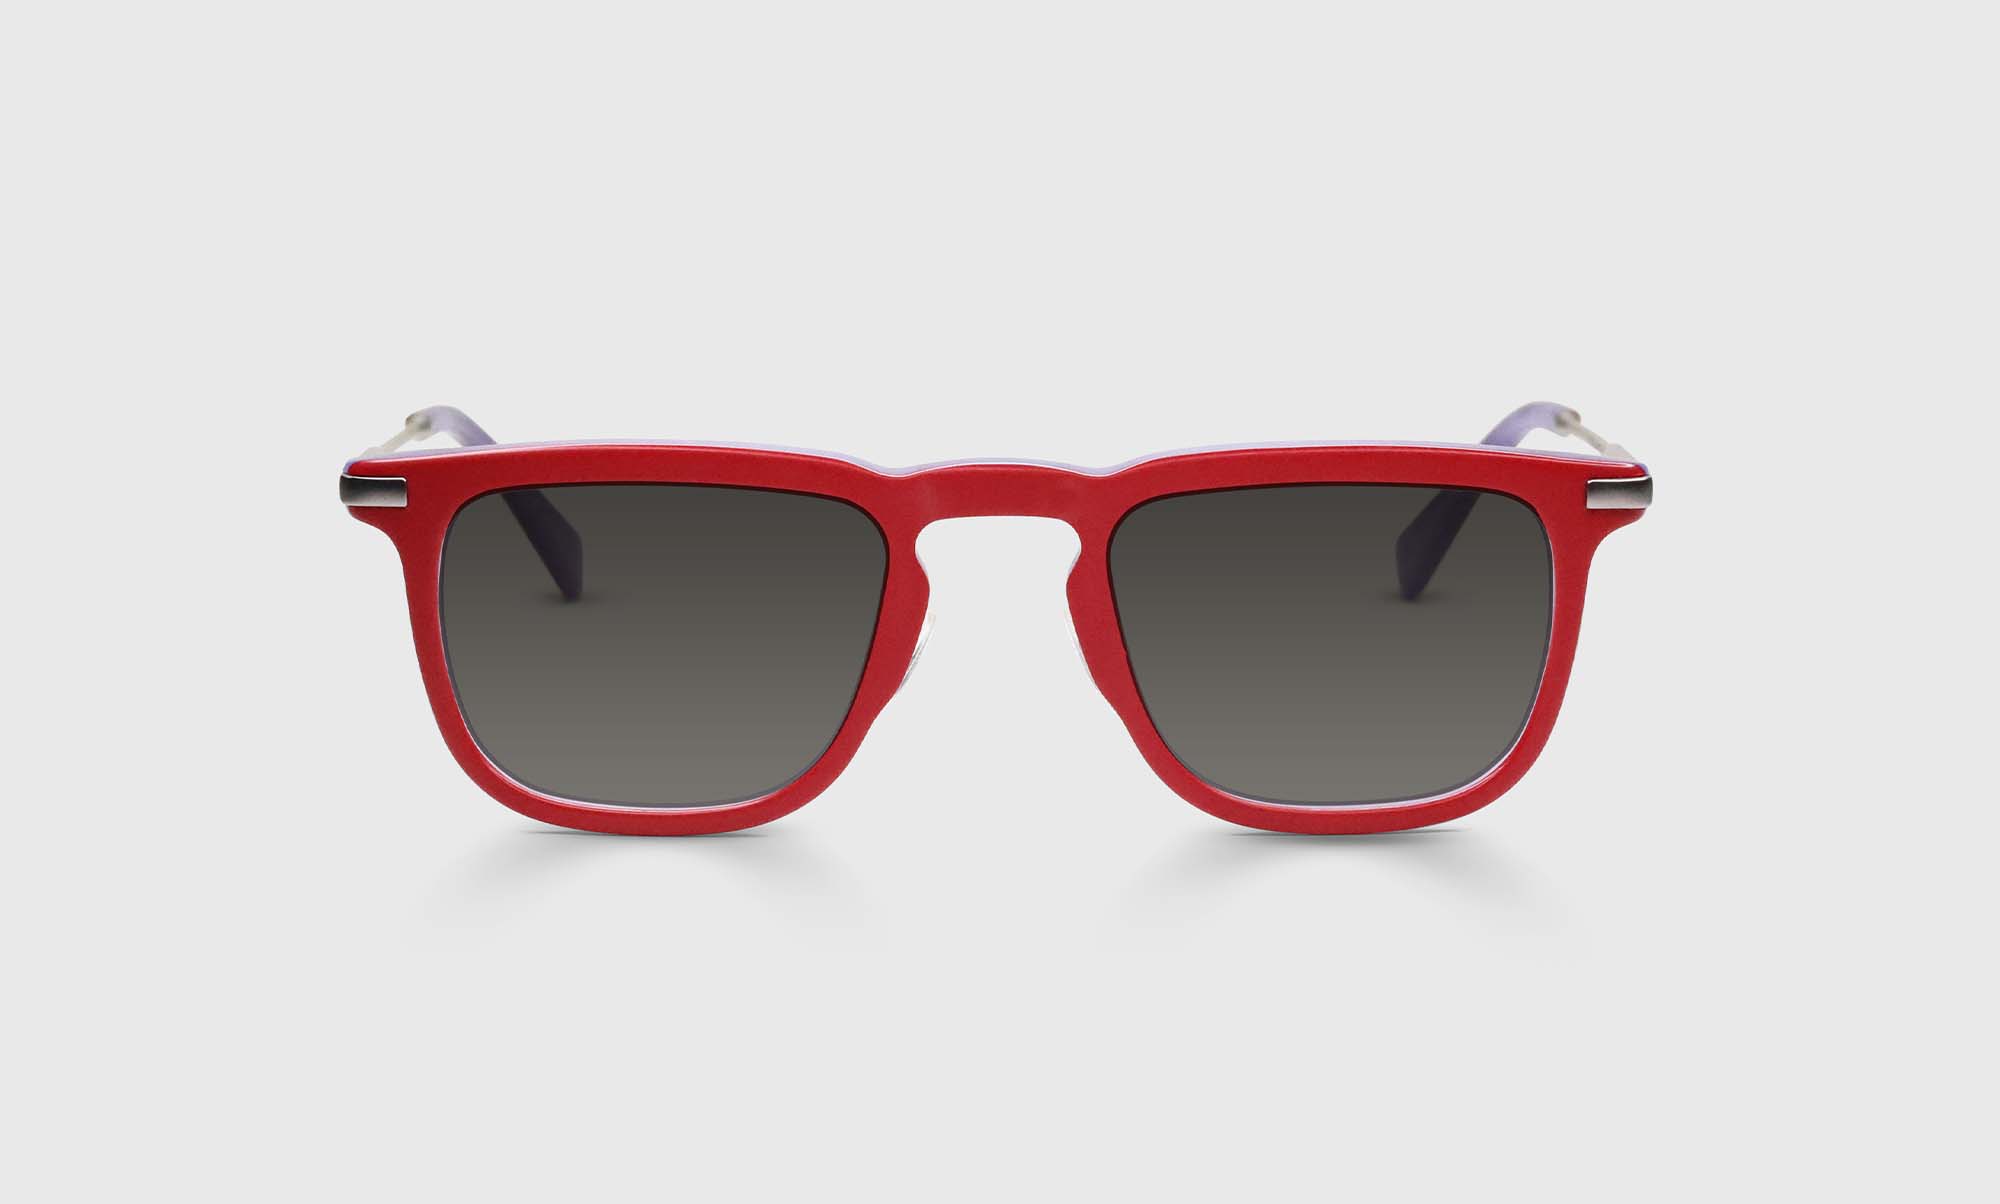 01-pg | eyebobs Small Fry, Average, Square, bifocal reader sunglasses, polarized grey sunglasses